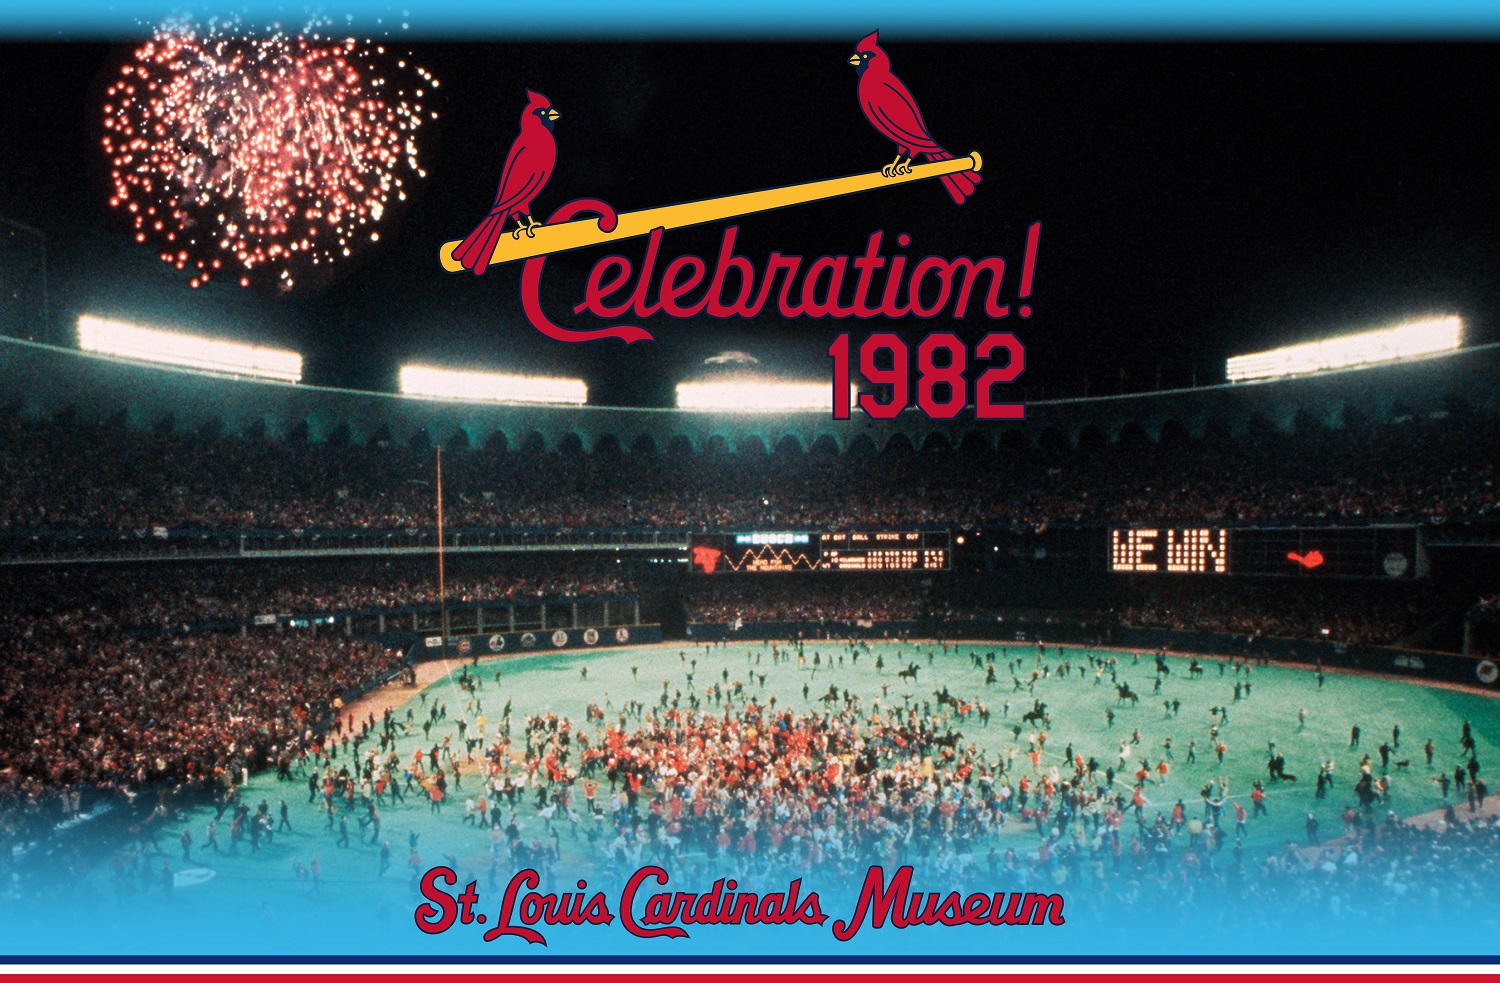 Lot Detail - 1982 St. Louis Cardinals World Series Trophy